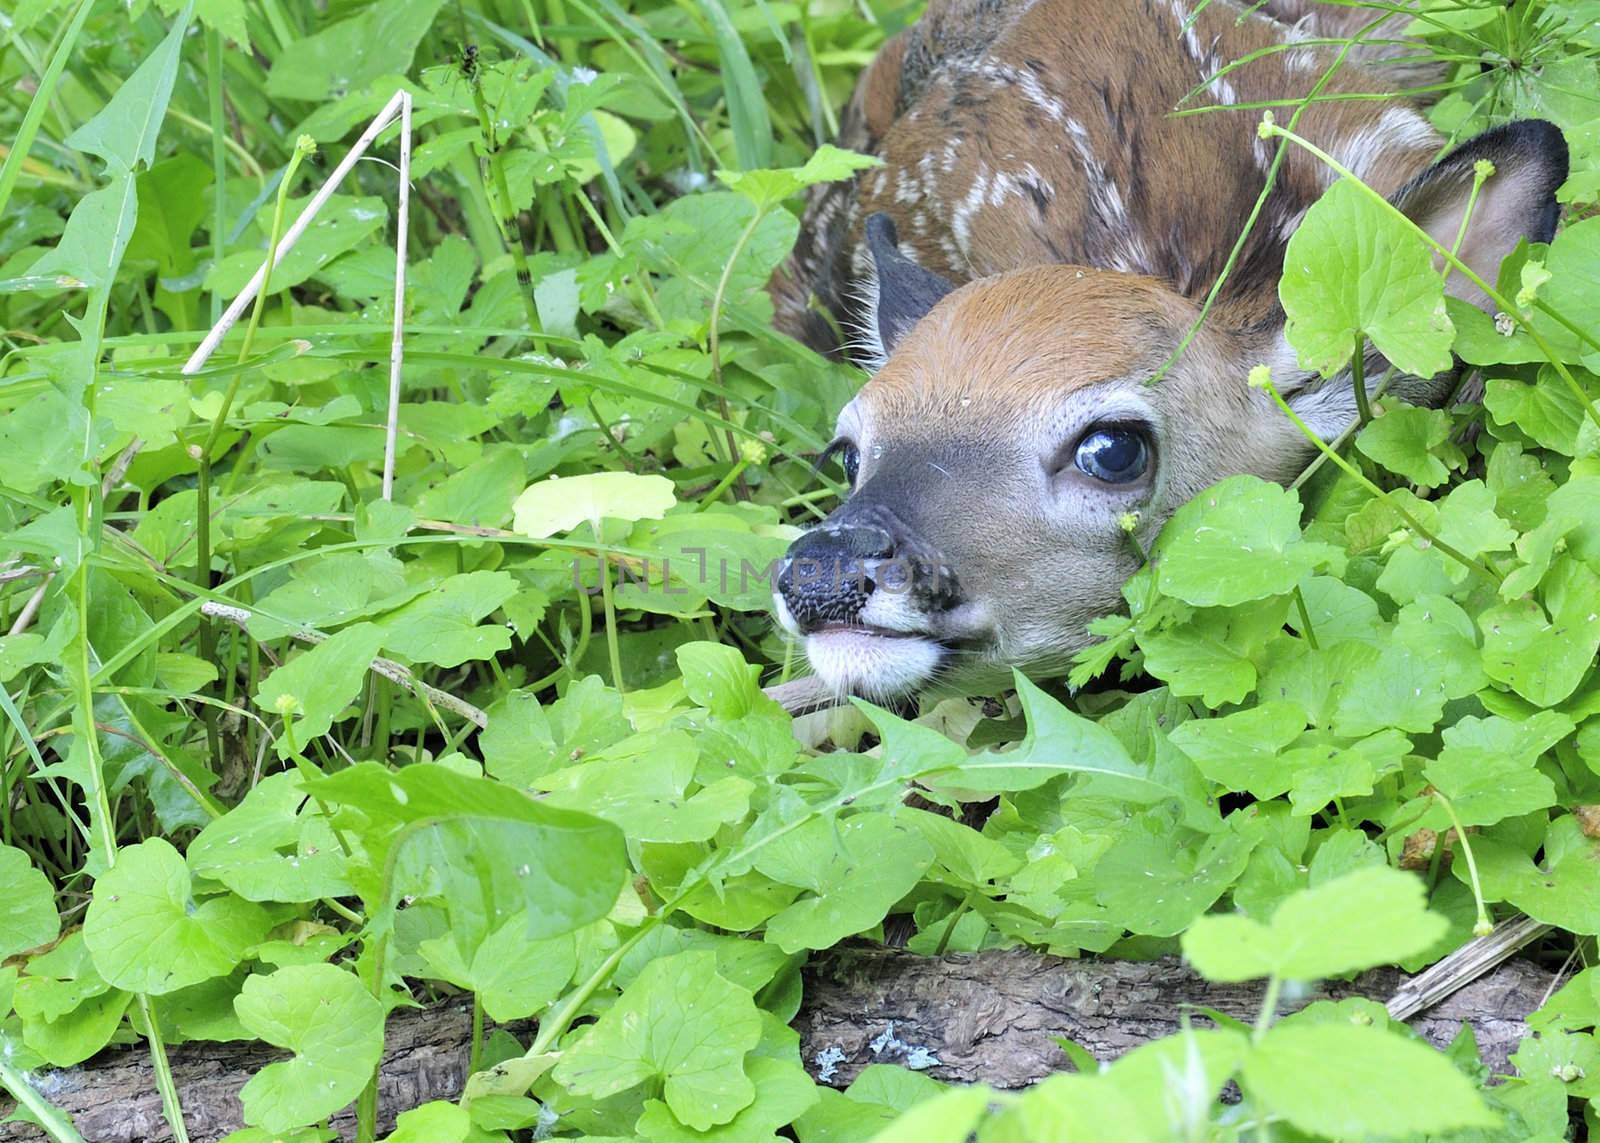 A newborn whitetail deer fawn hiding in the grass.